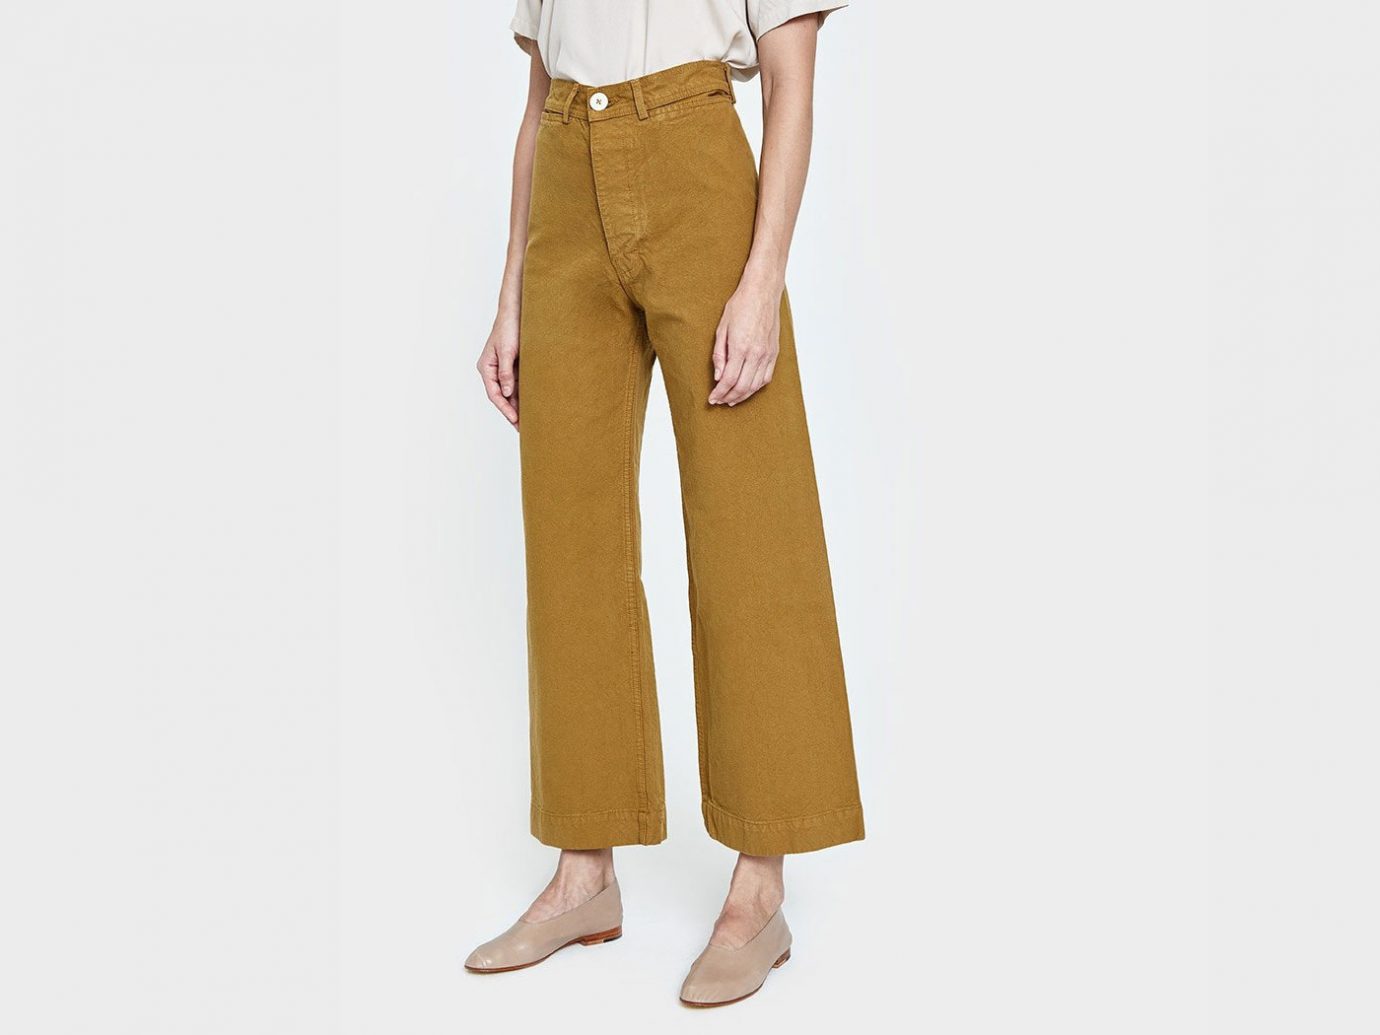 Travel Shop Travel Trends clothing khaki jeans trousers trouser waist joint pocket active pants denim posing dressed